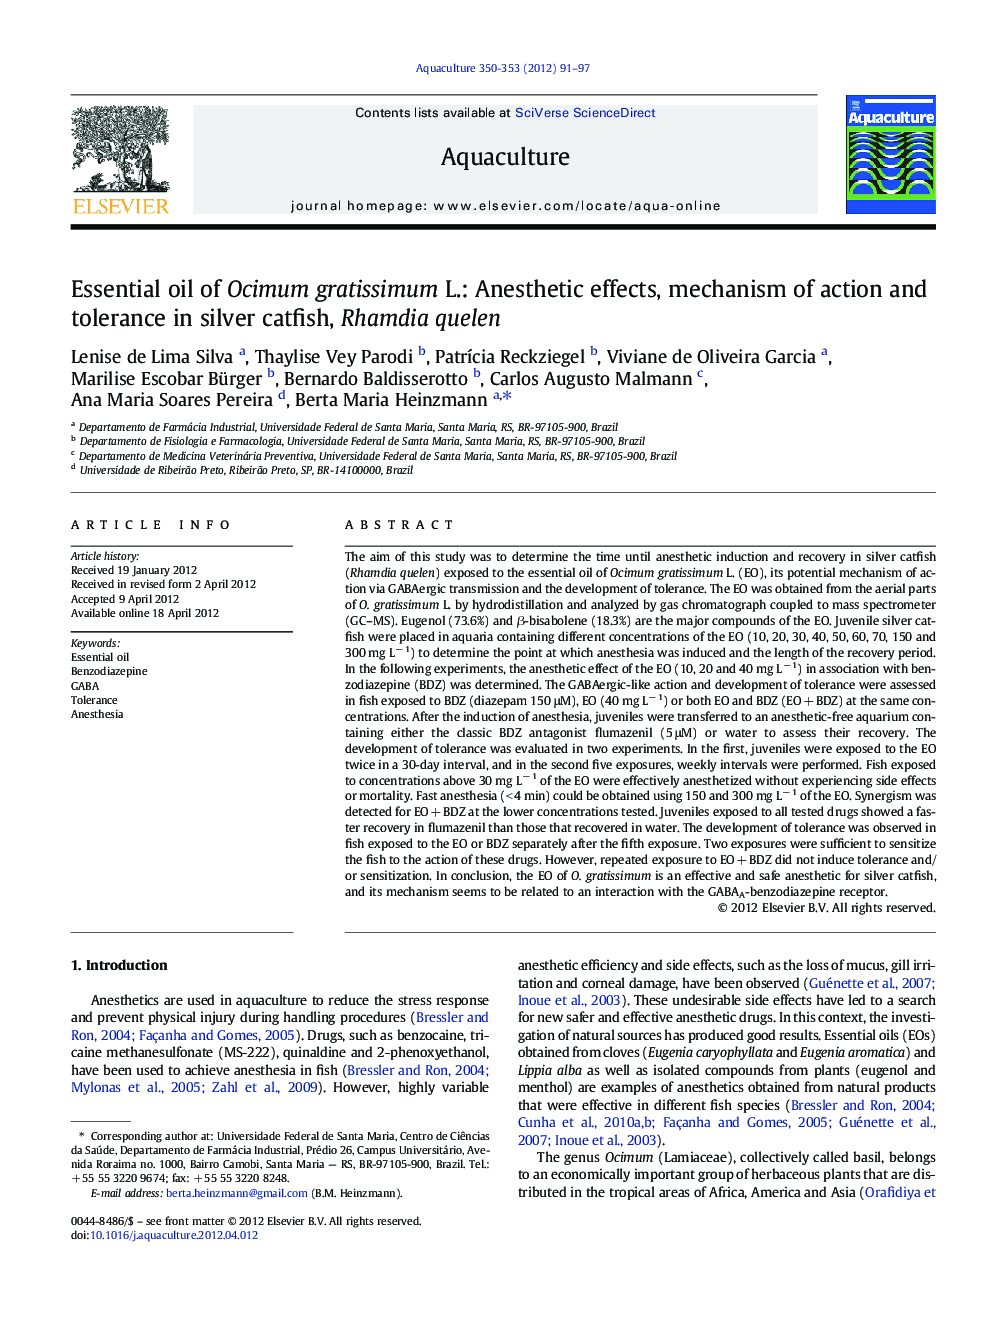 Essential oil of Ocimum gratissimum L.: Anesthetic effects, mechanism of action and tolerance in silver catfish, Rhamdia quelen